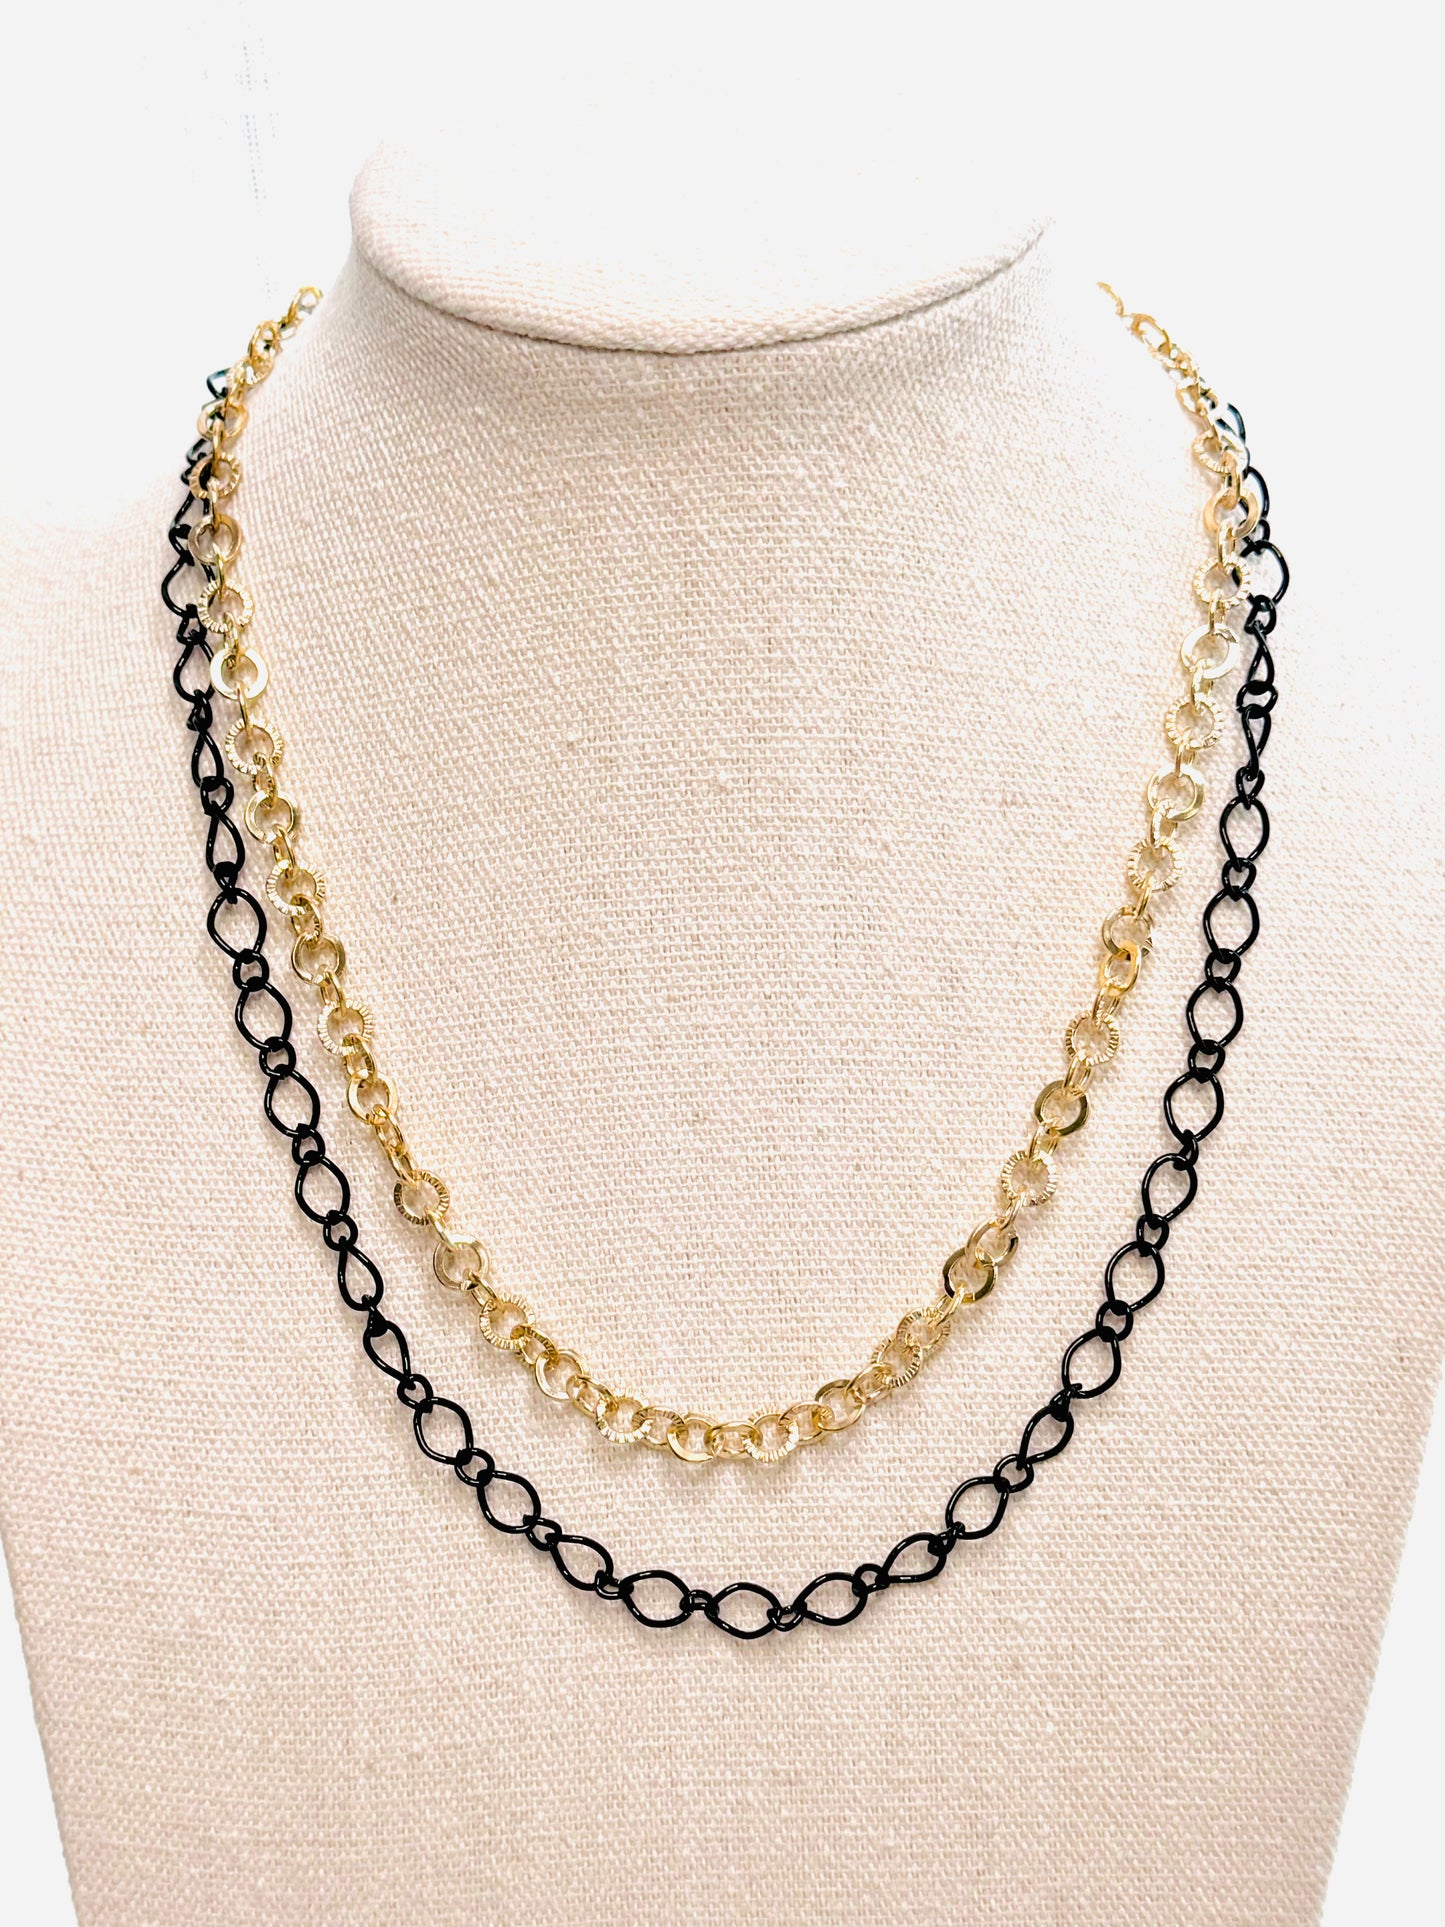 Black + Gold Chain Duet Necklace